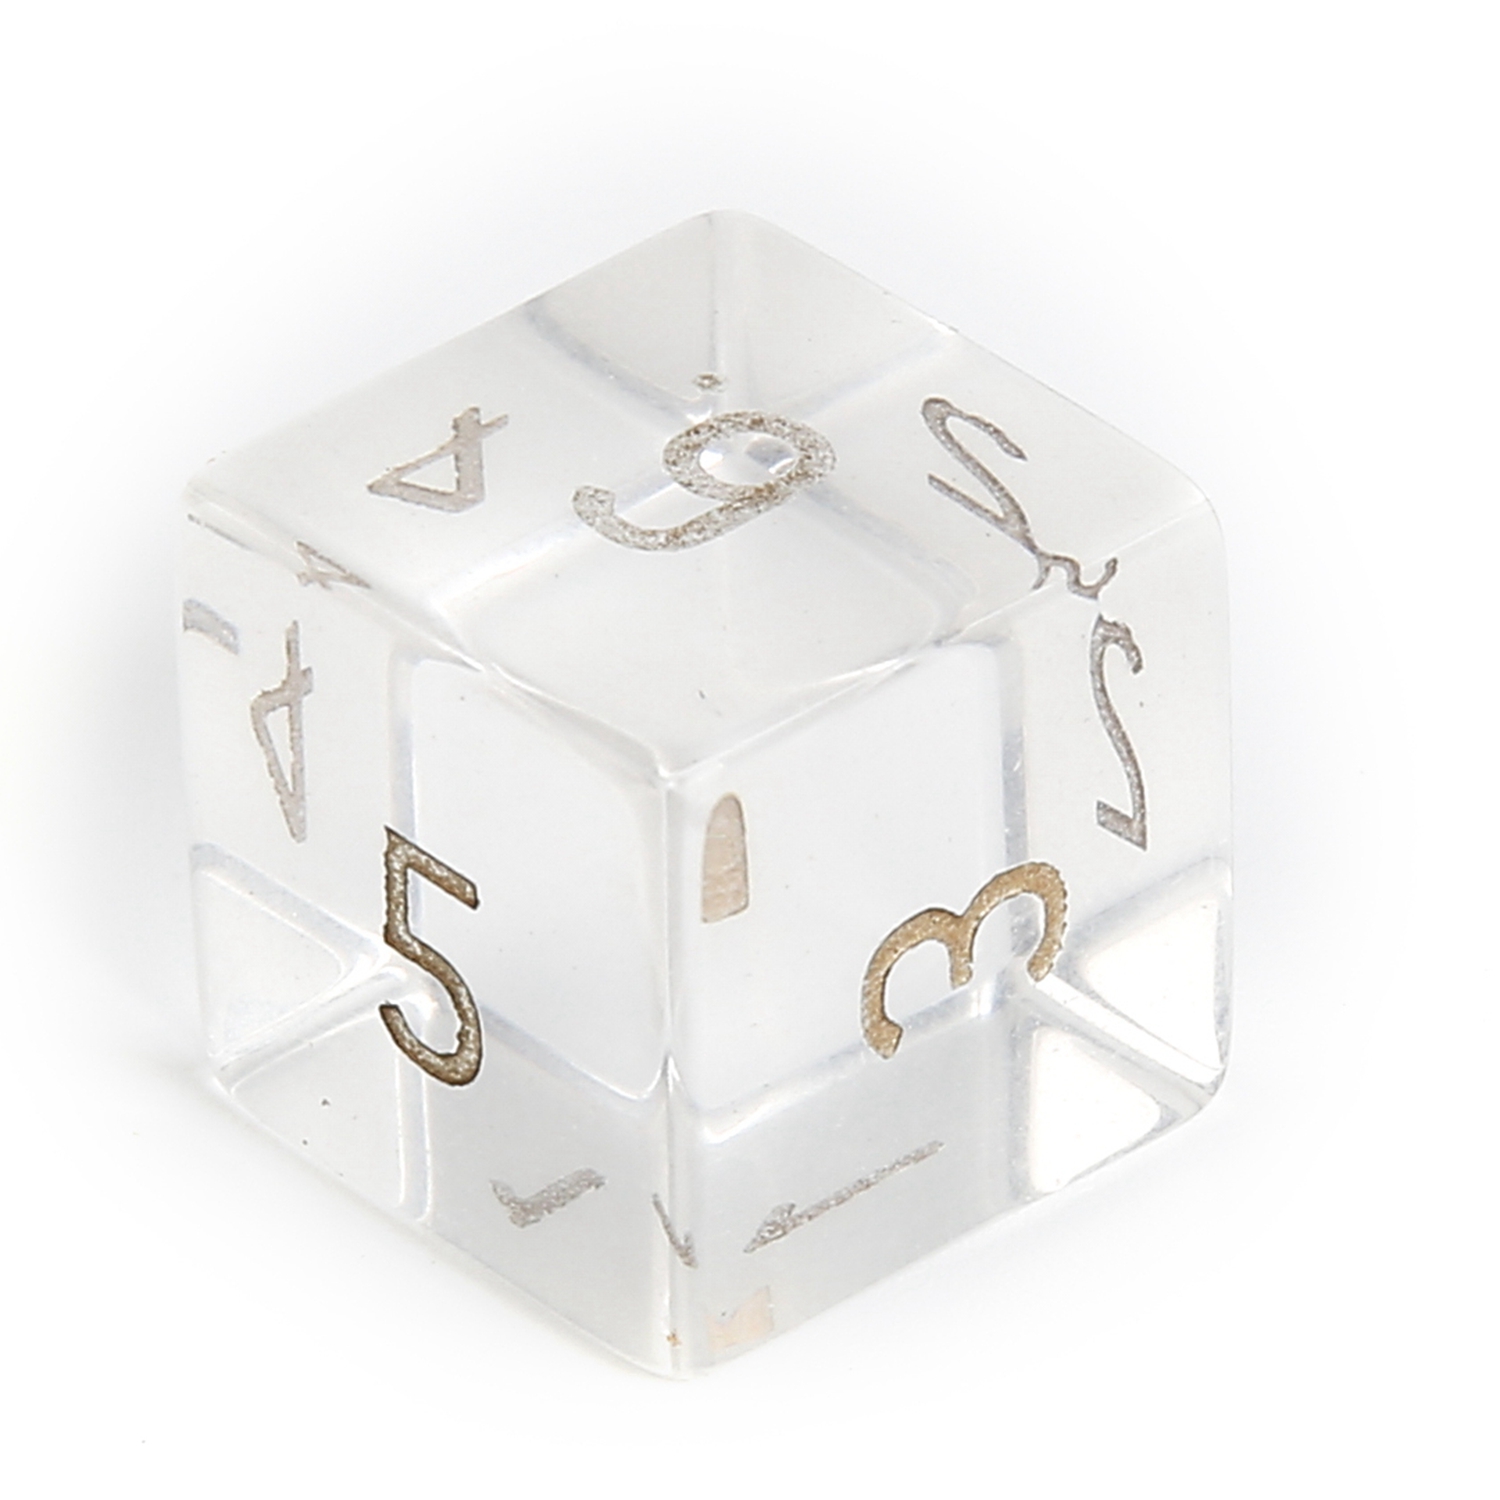 2:D6 icosahedron